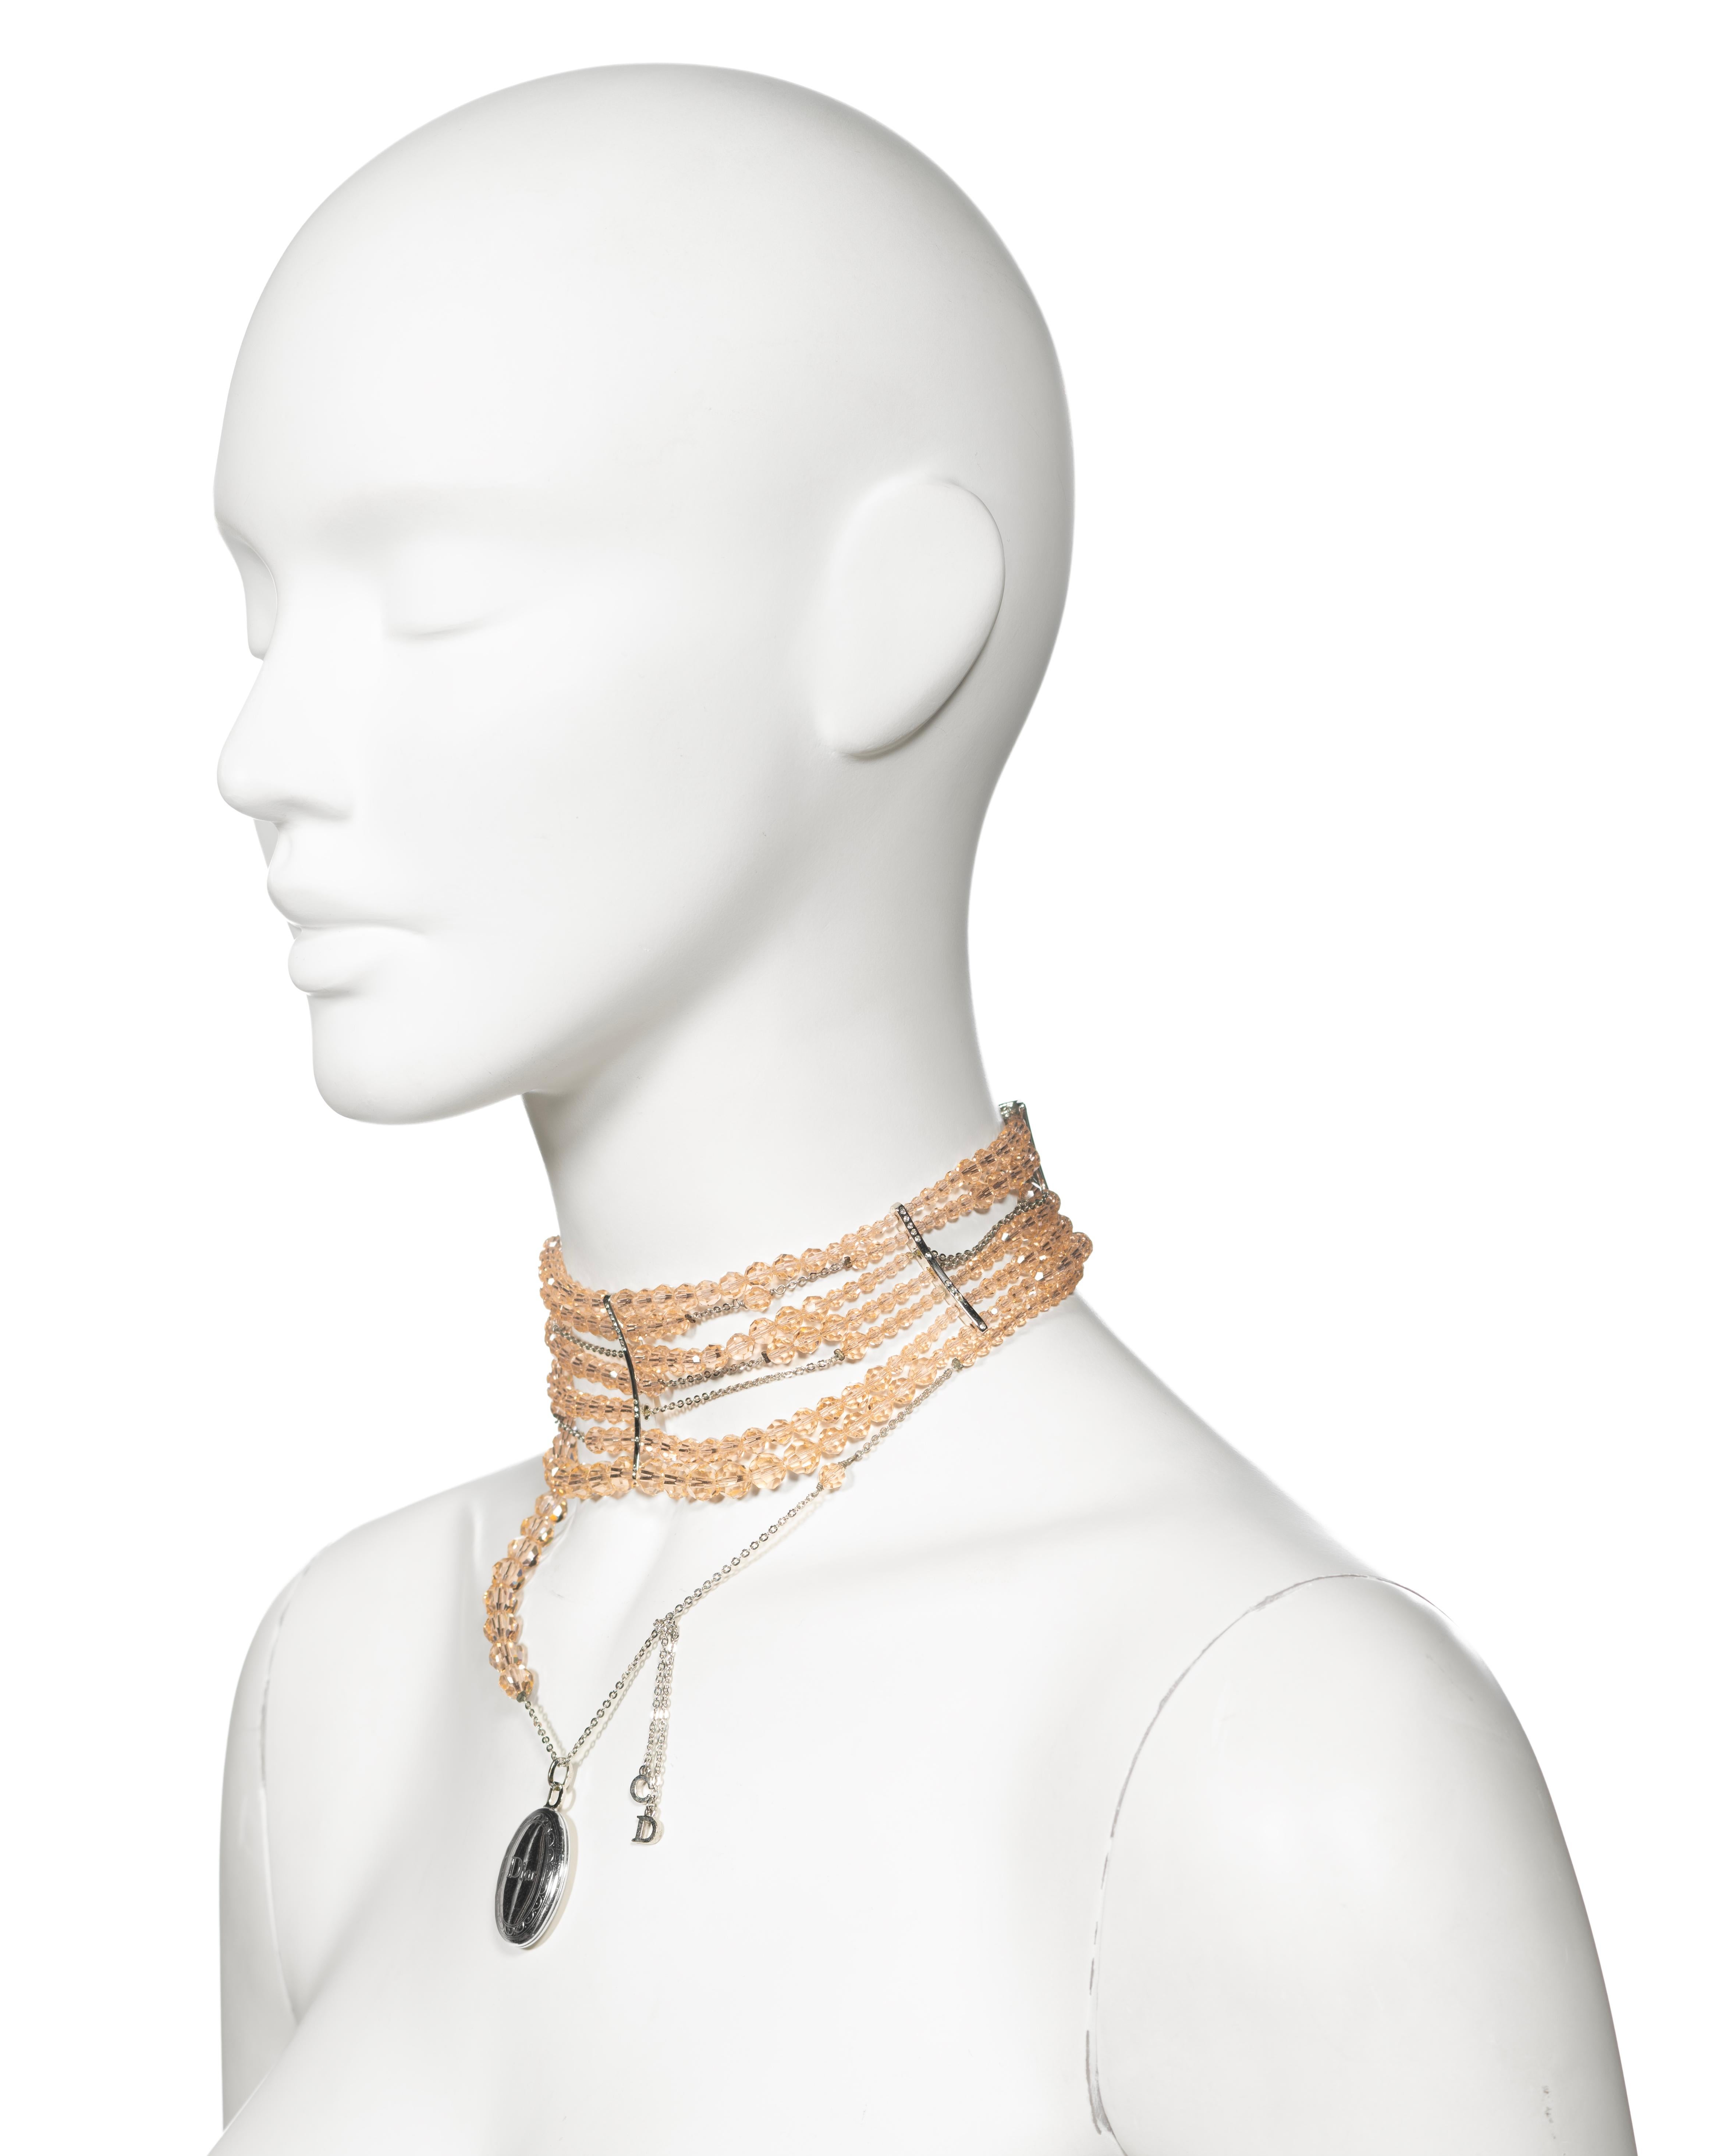 Christian Dior by John Galliano Distressed Peach Bead Choker Necklace, c. 2004 5